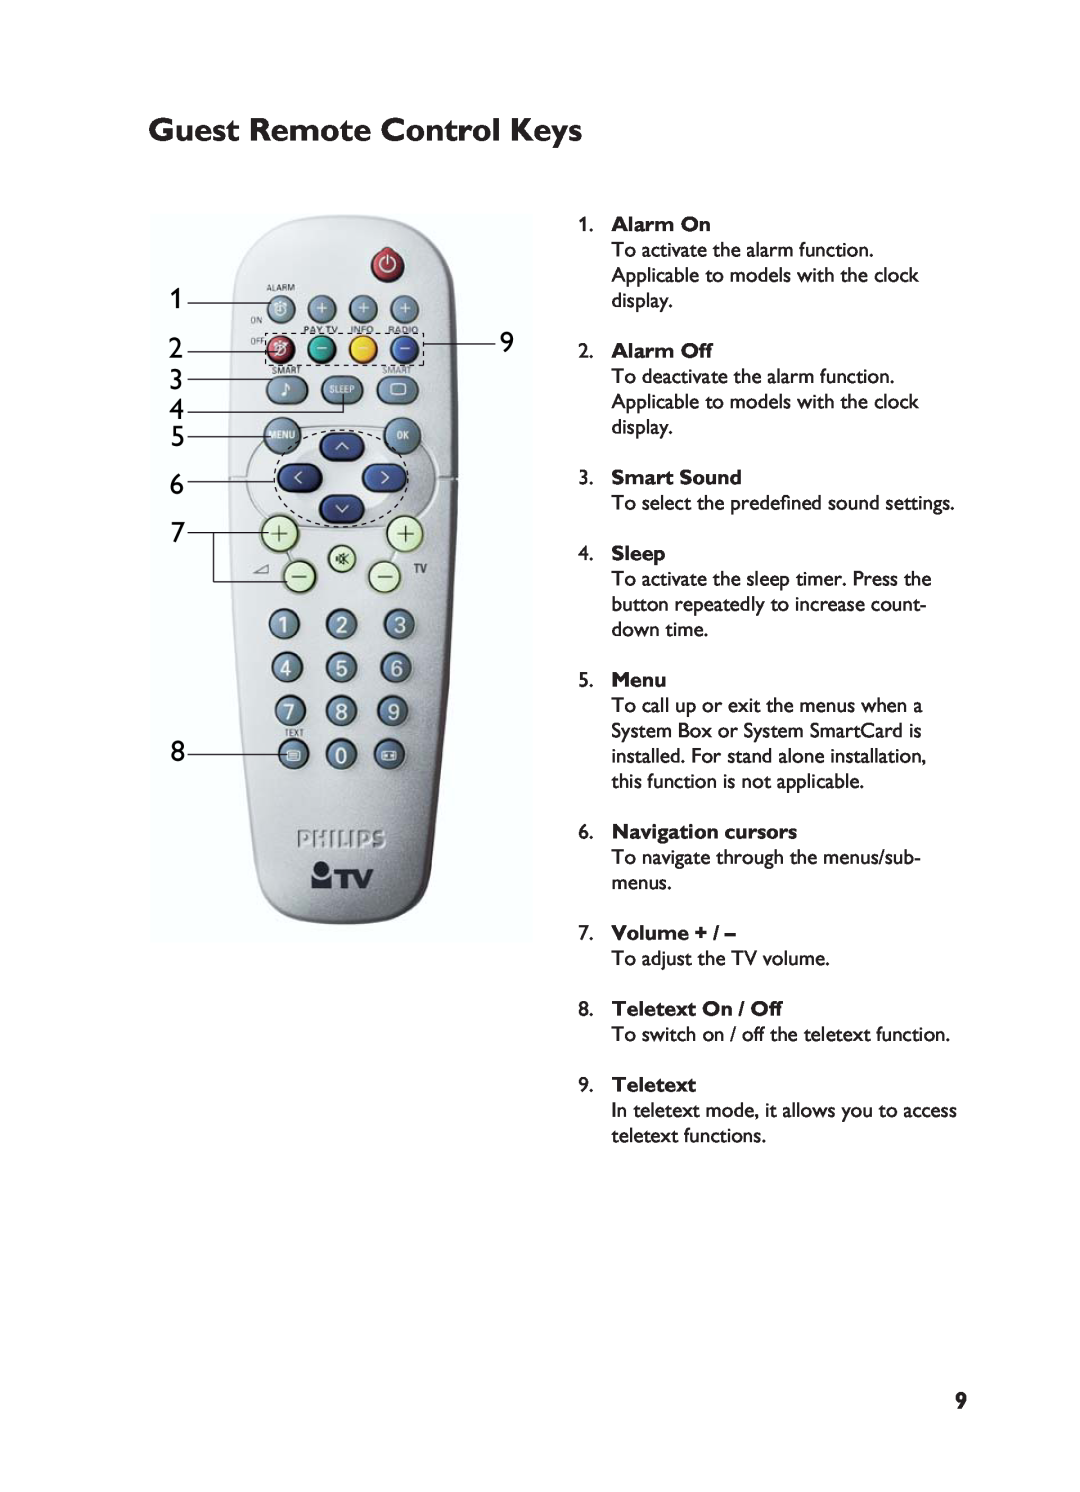 Philips 32HF5445 Guest Remote Control Keys, Alarm On, Alarm Off, Smart Sound, Sleep, Menu, Navigation cursors, Volume + 